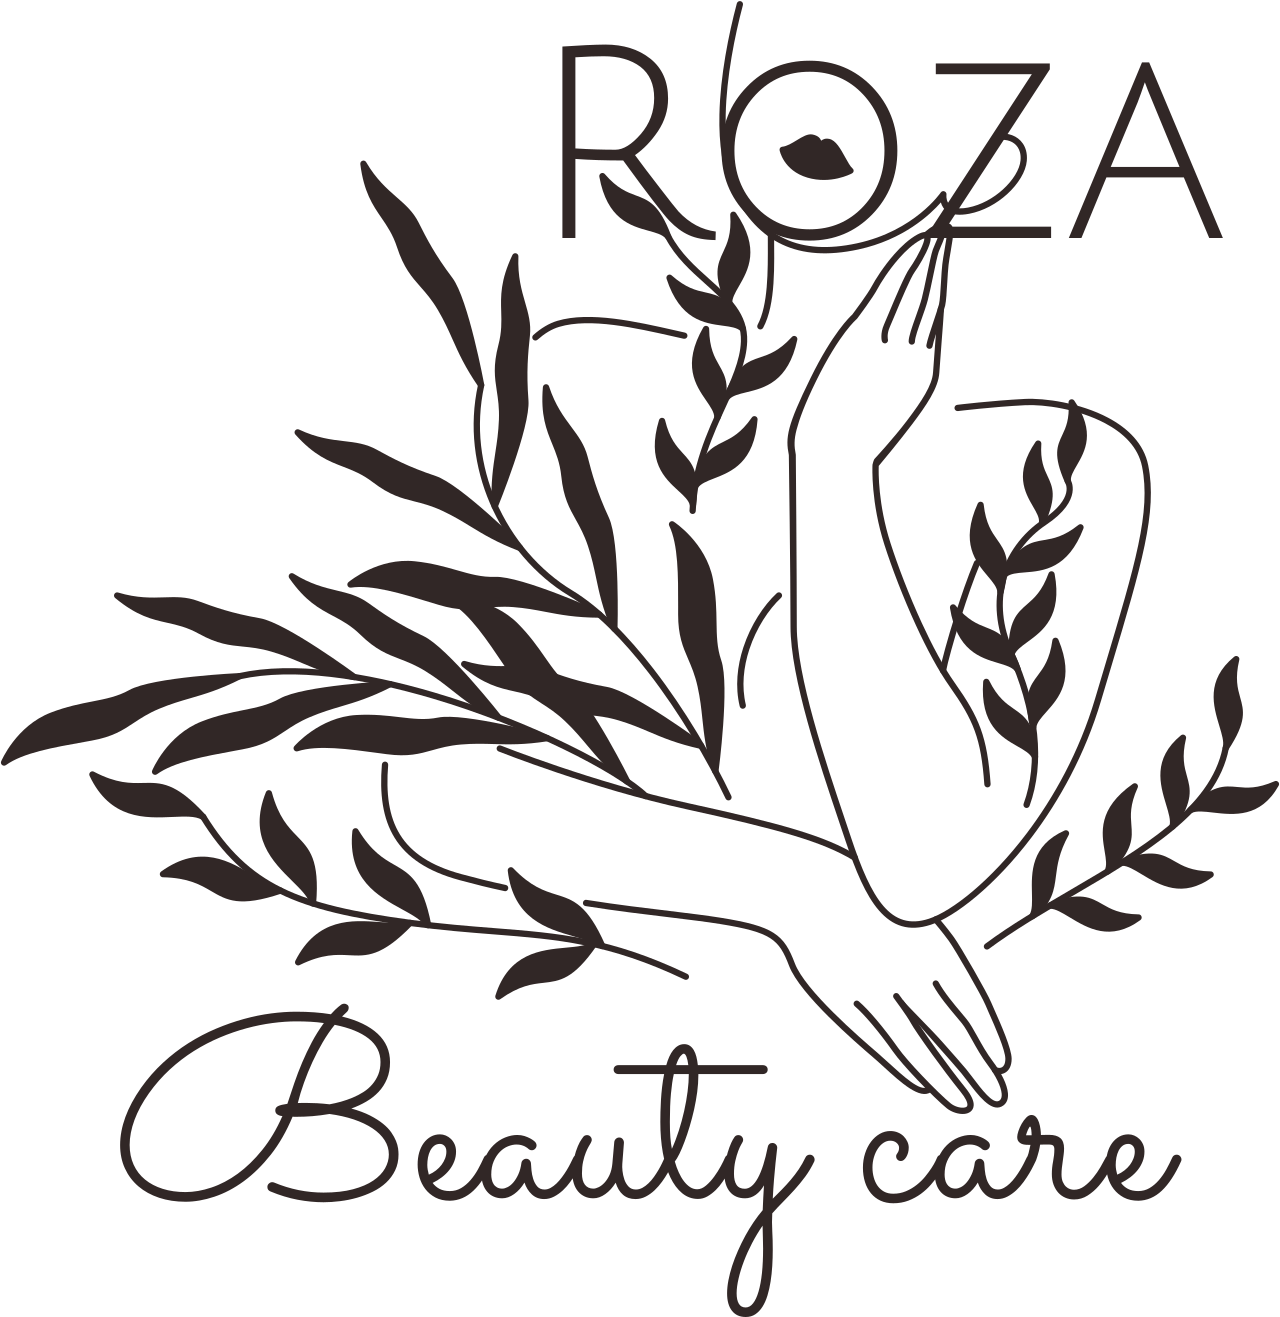 Roza's logo